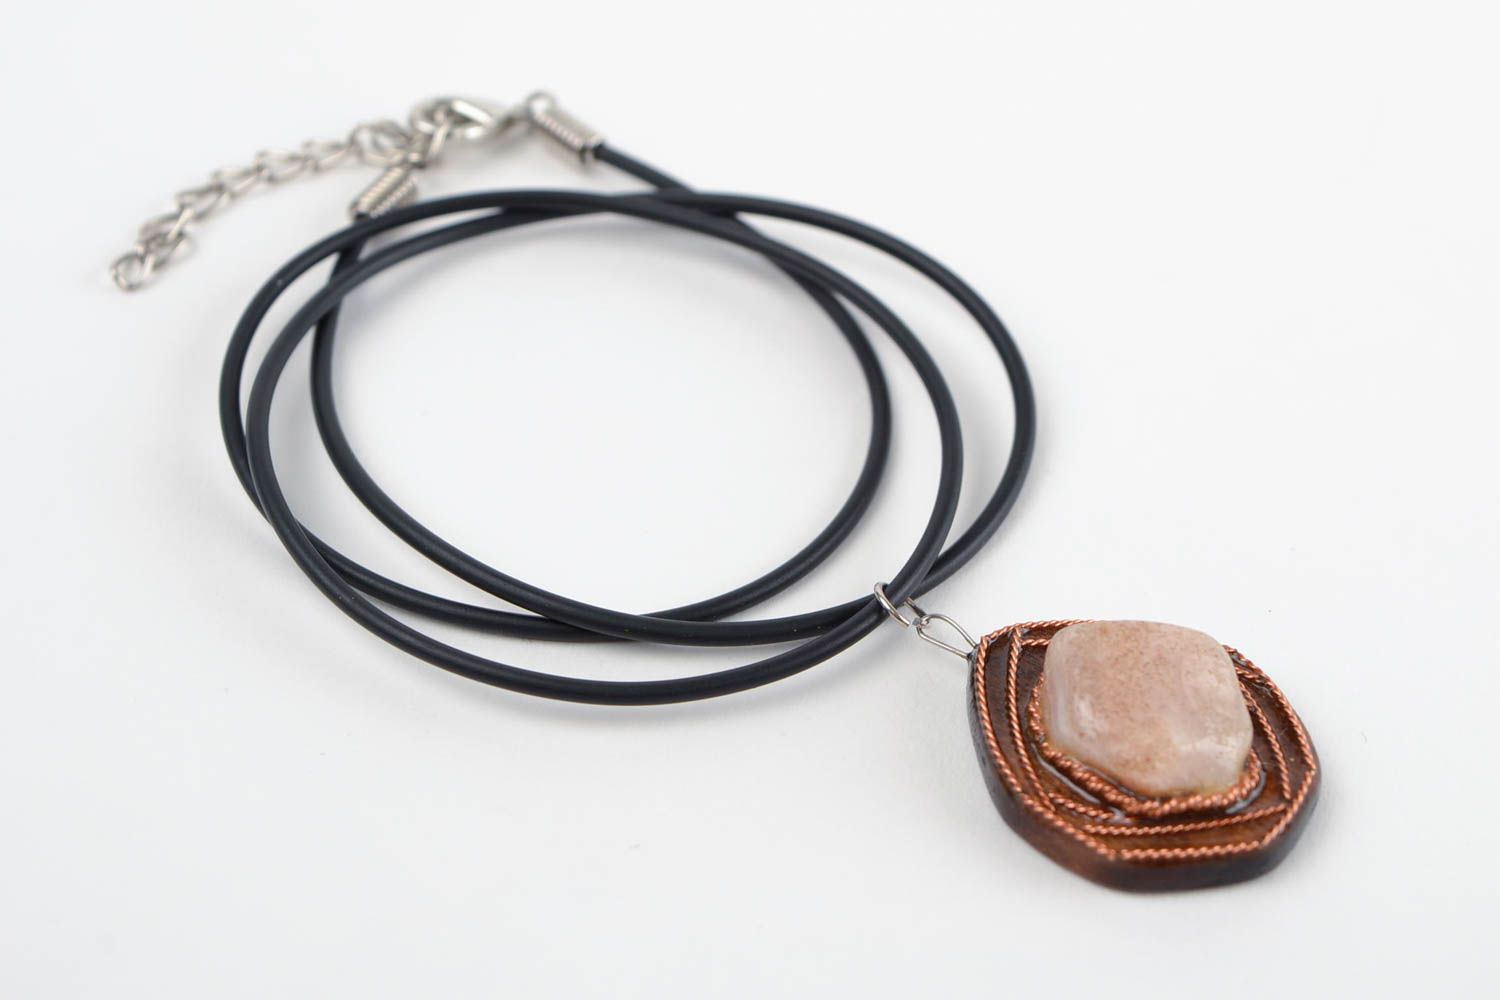 Handmade wooden pendant jewelry with natural stone stylish pendant gift photo 2